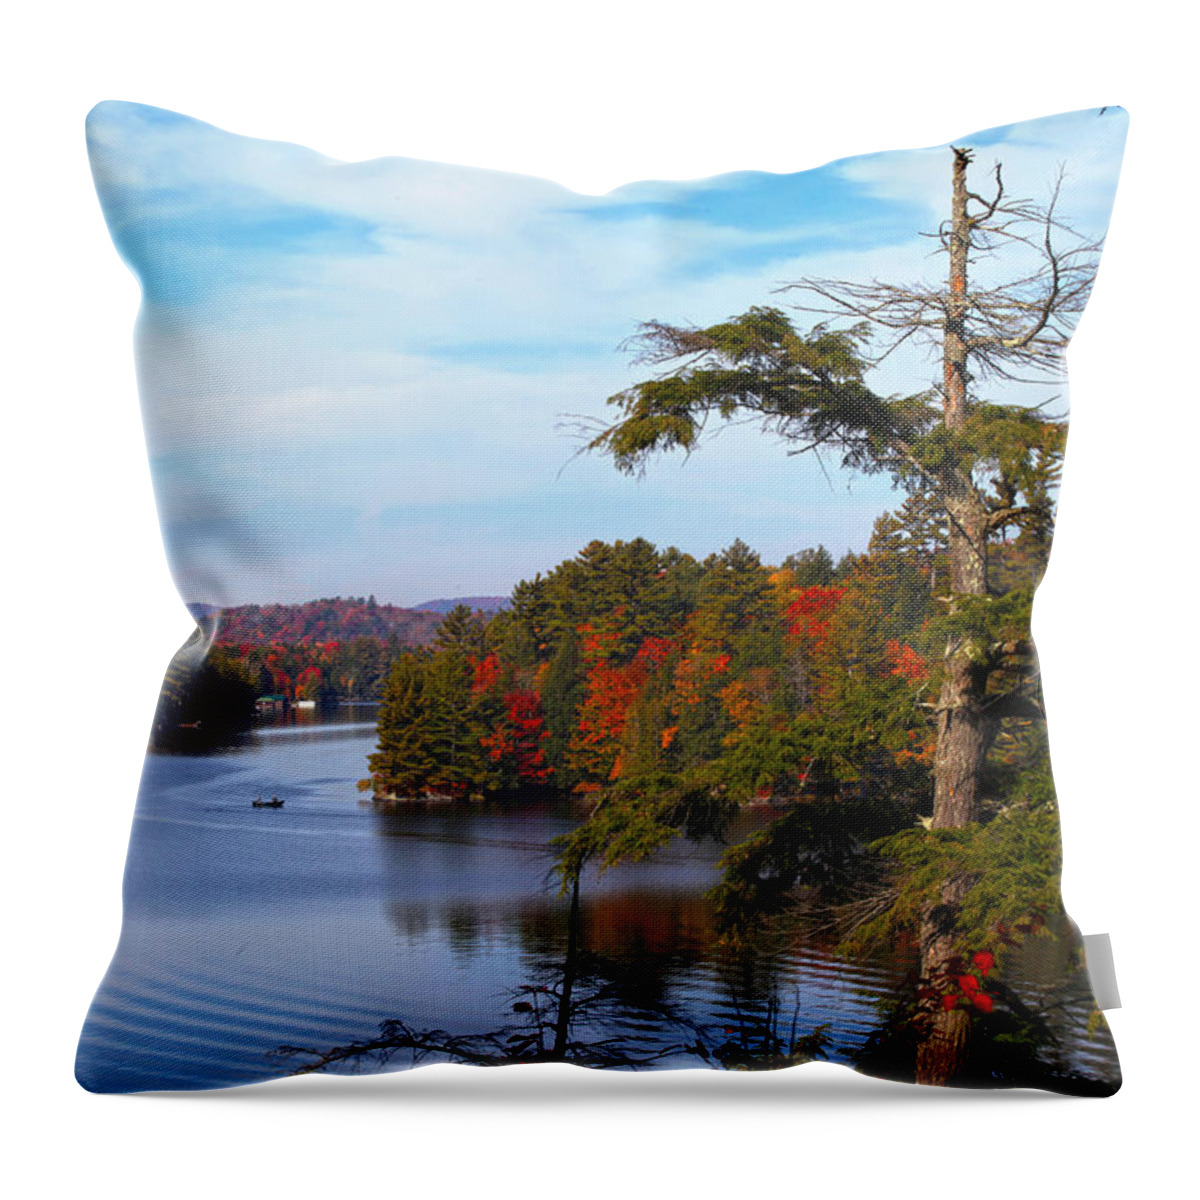 Adirondack Throw Pillow featuring the photograph Adirondack View by Robert Och